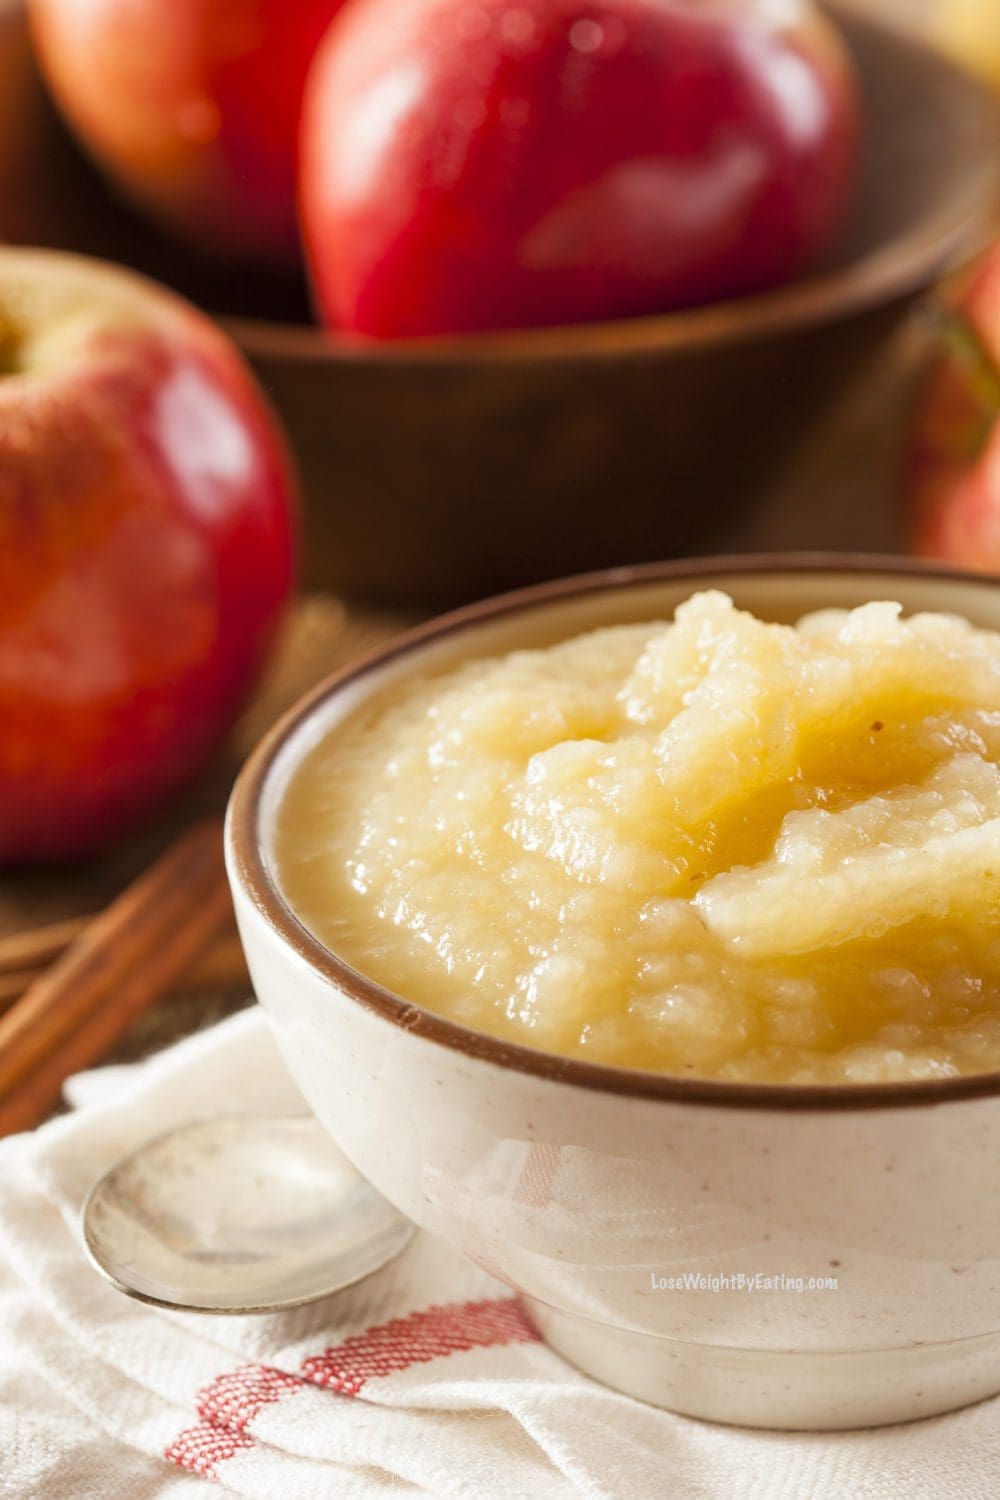 Low Calorie Homemade Apple Sauce Instant Pot Recipe